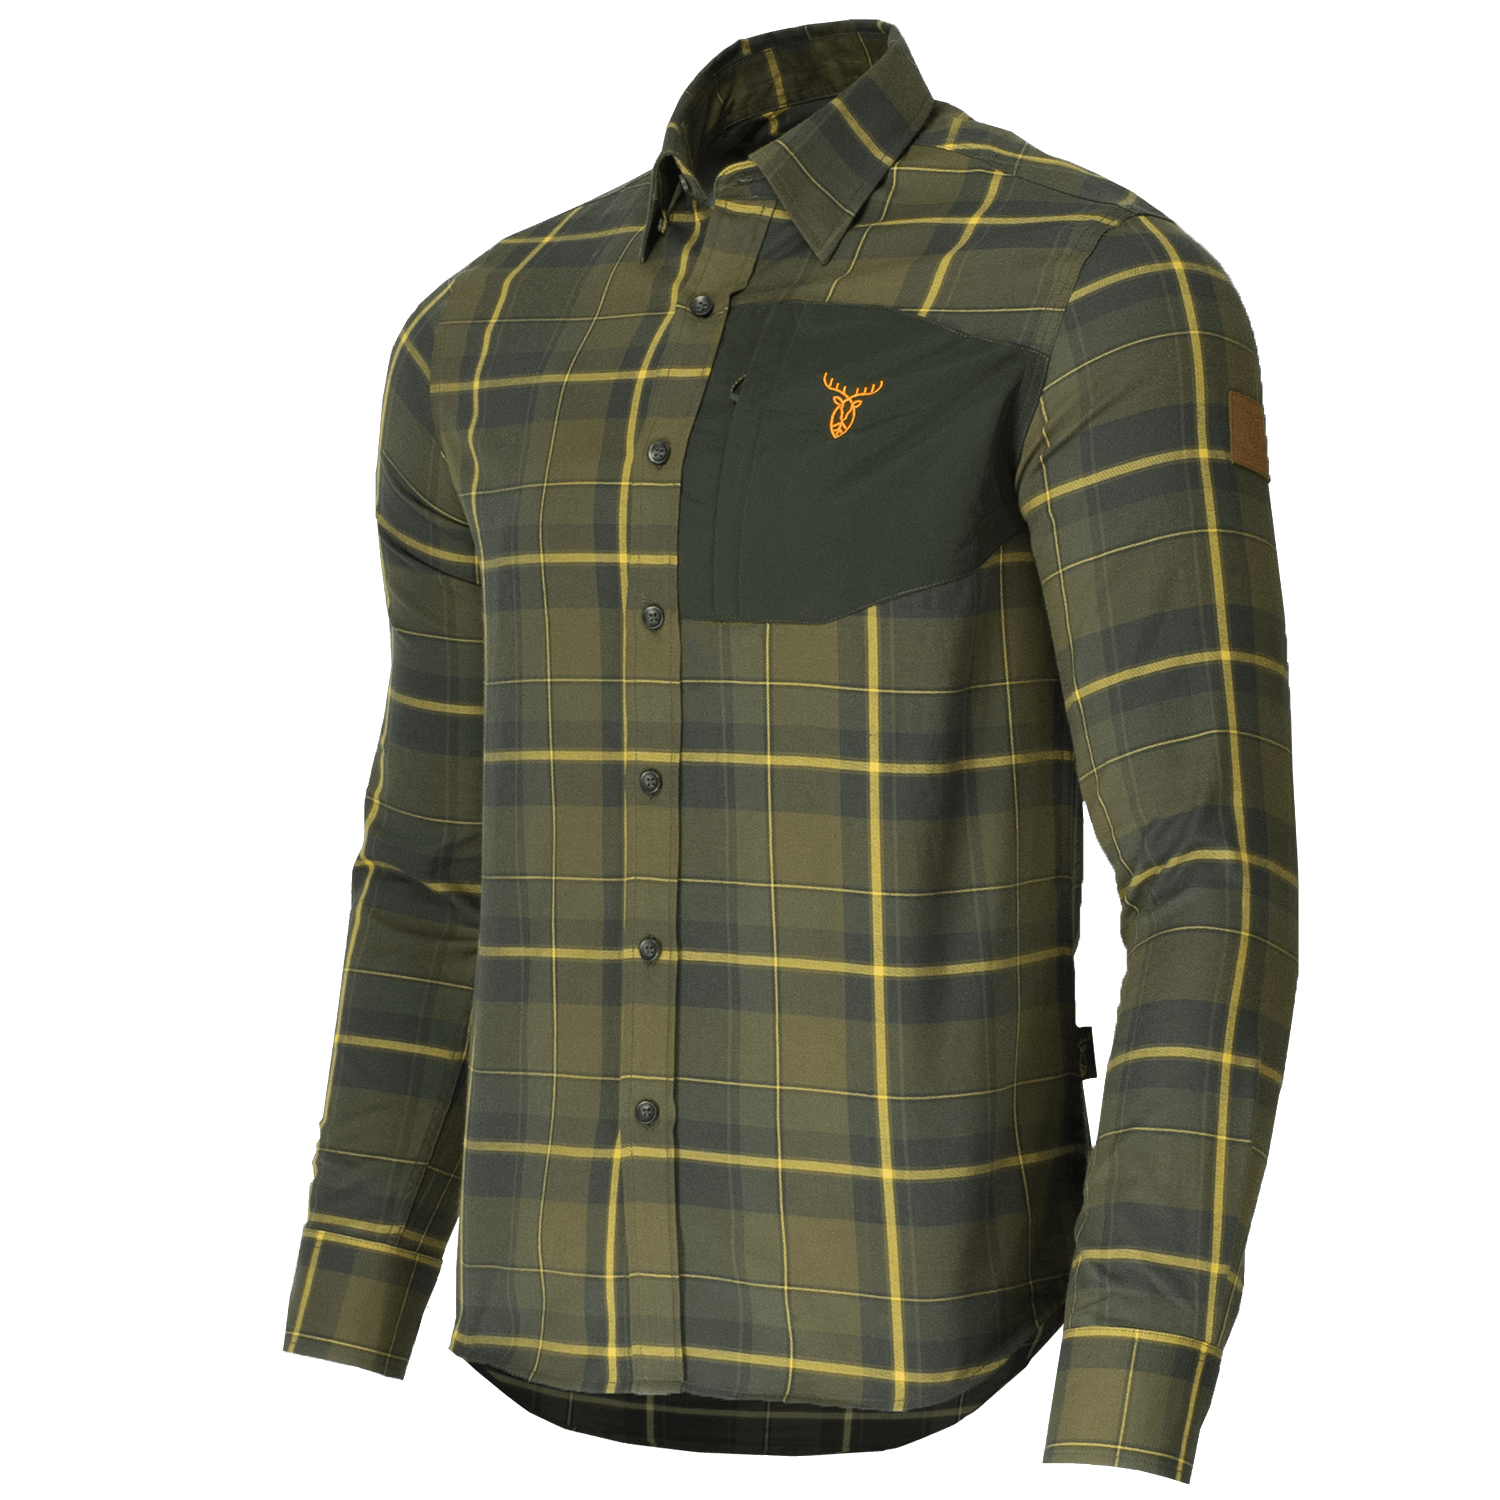  Pirscher Gear Veldoverhemd (Knispergroen) - Cadeaus voor jagers